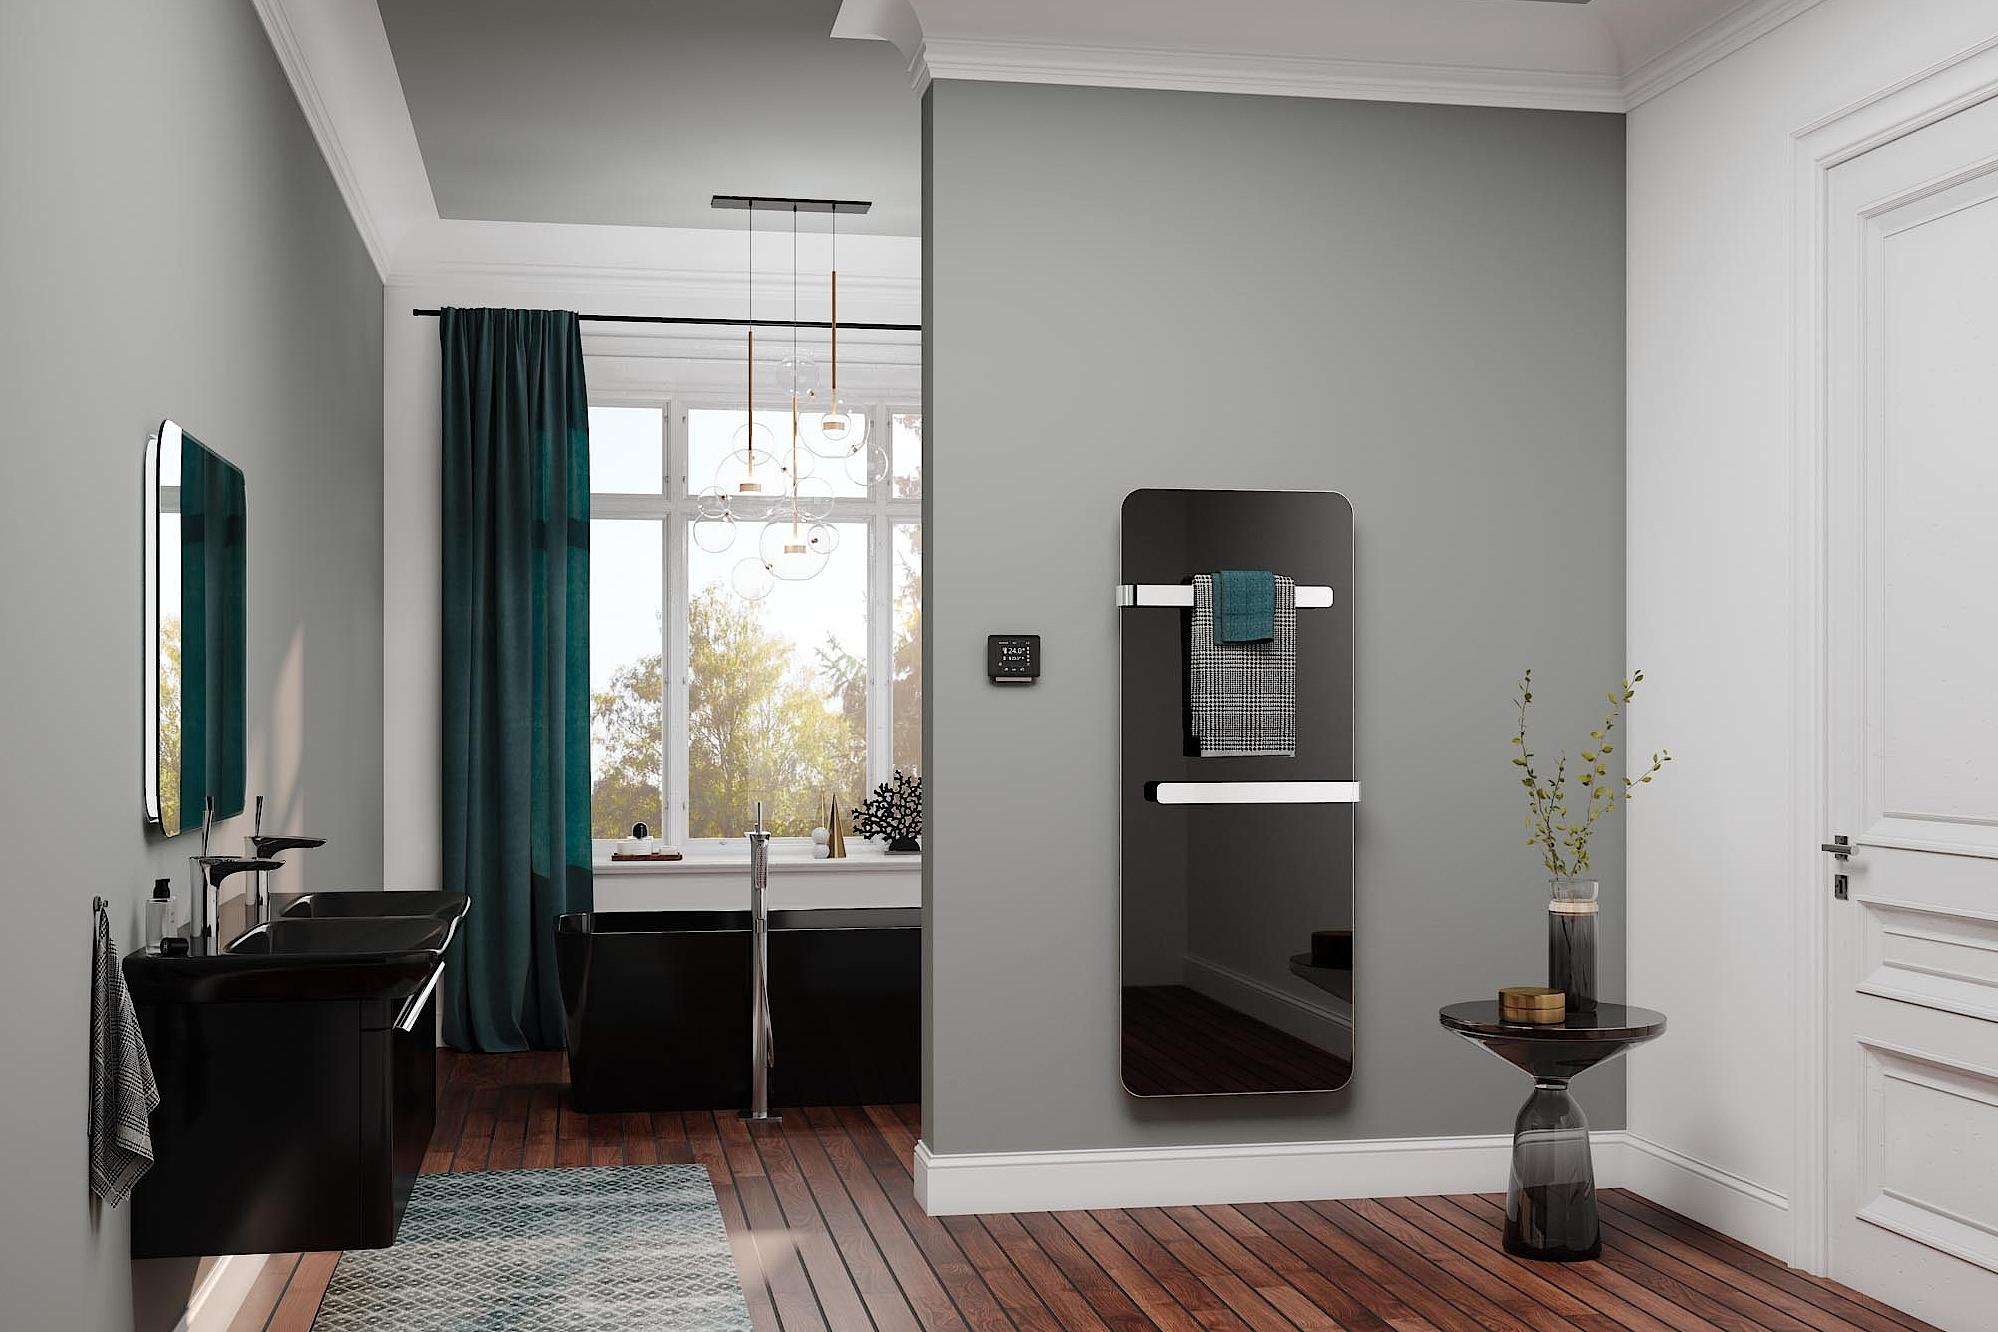 Kermi Elveo design and bathroom radiators – state-of-the-art design. Heat via infrared.